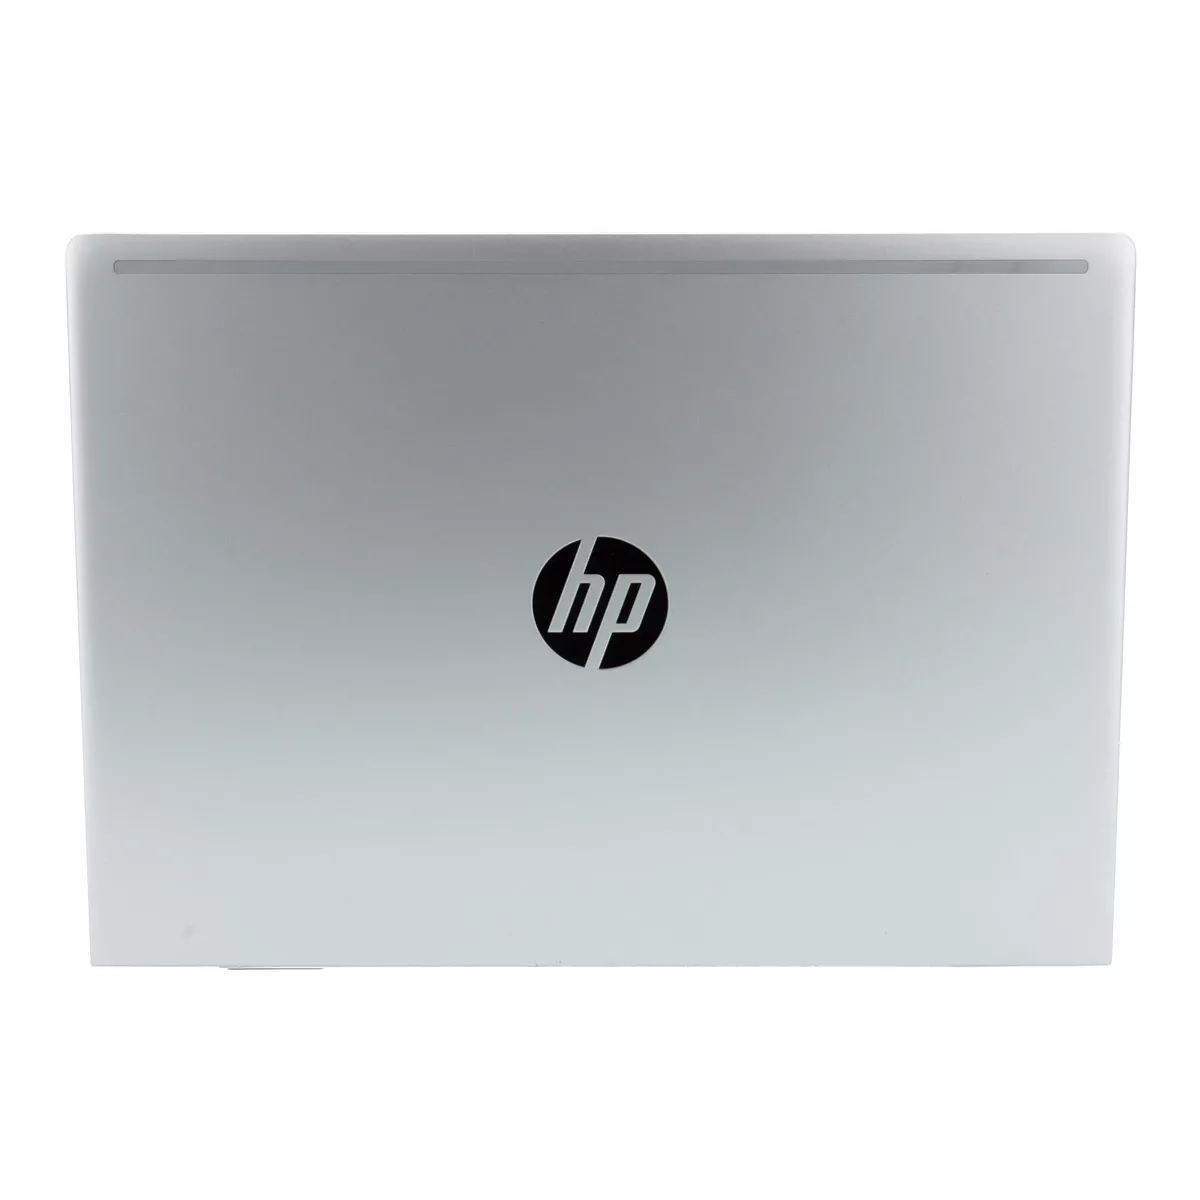 HP ProBook 445R G6 AMD Ryzen 5 3500U 8 GB 240 GB M.2 nVME SSD Webcam A+